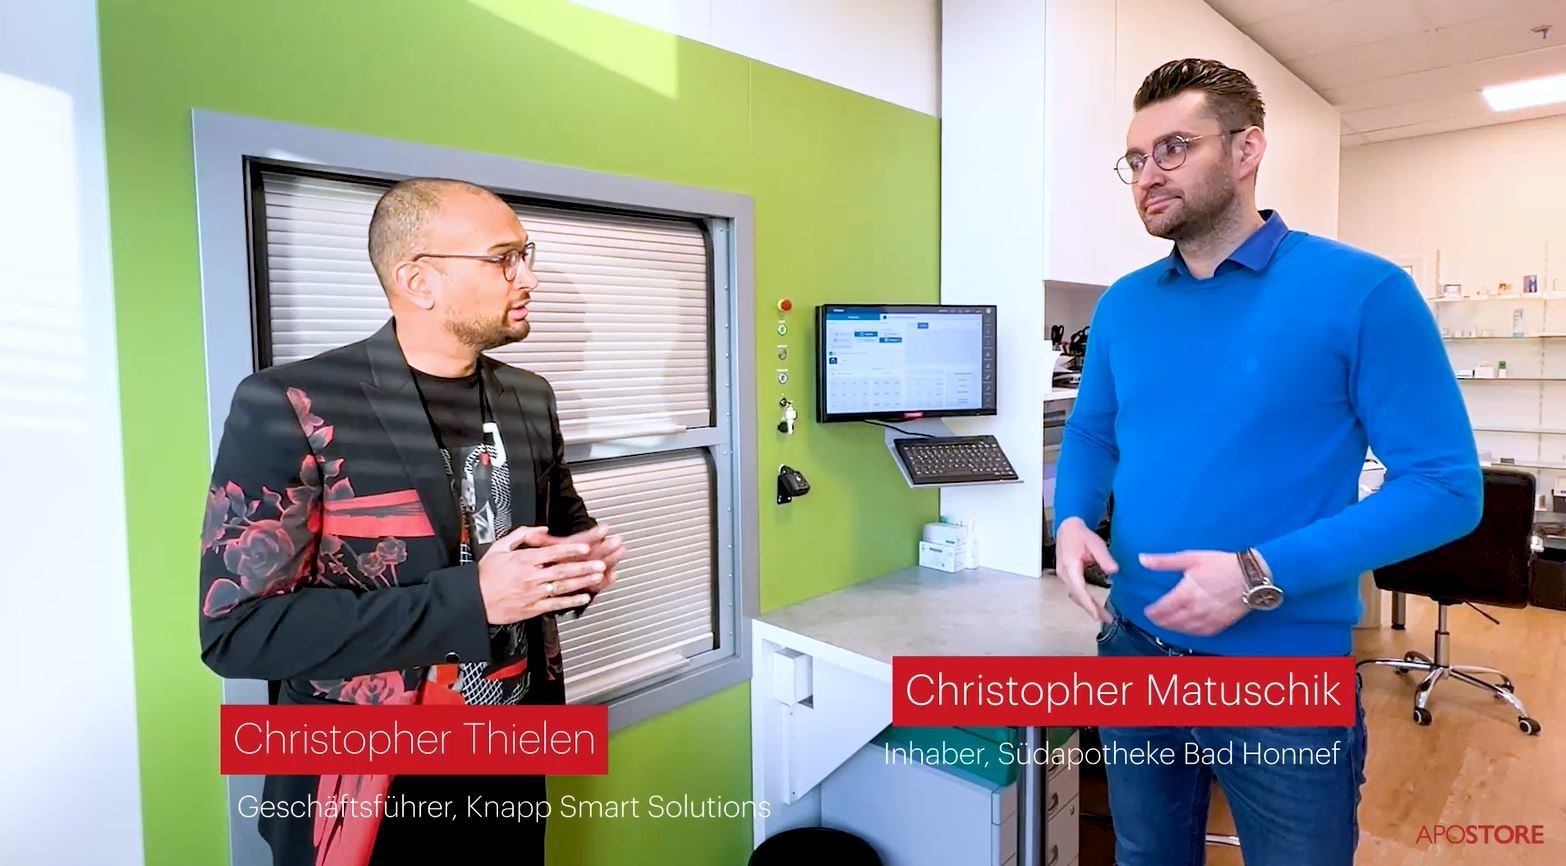 Knapp Smart Solutions Apostore Apothekenautomation Christoph Matuschik Christopher Thielen